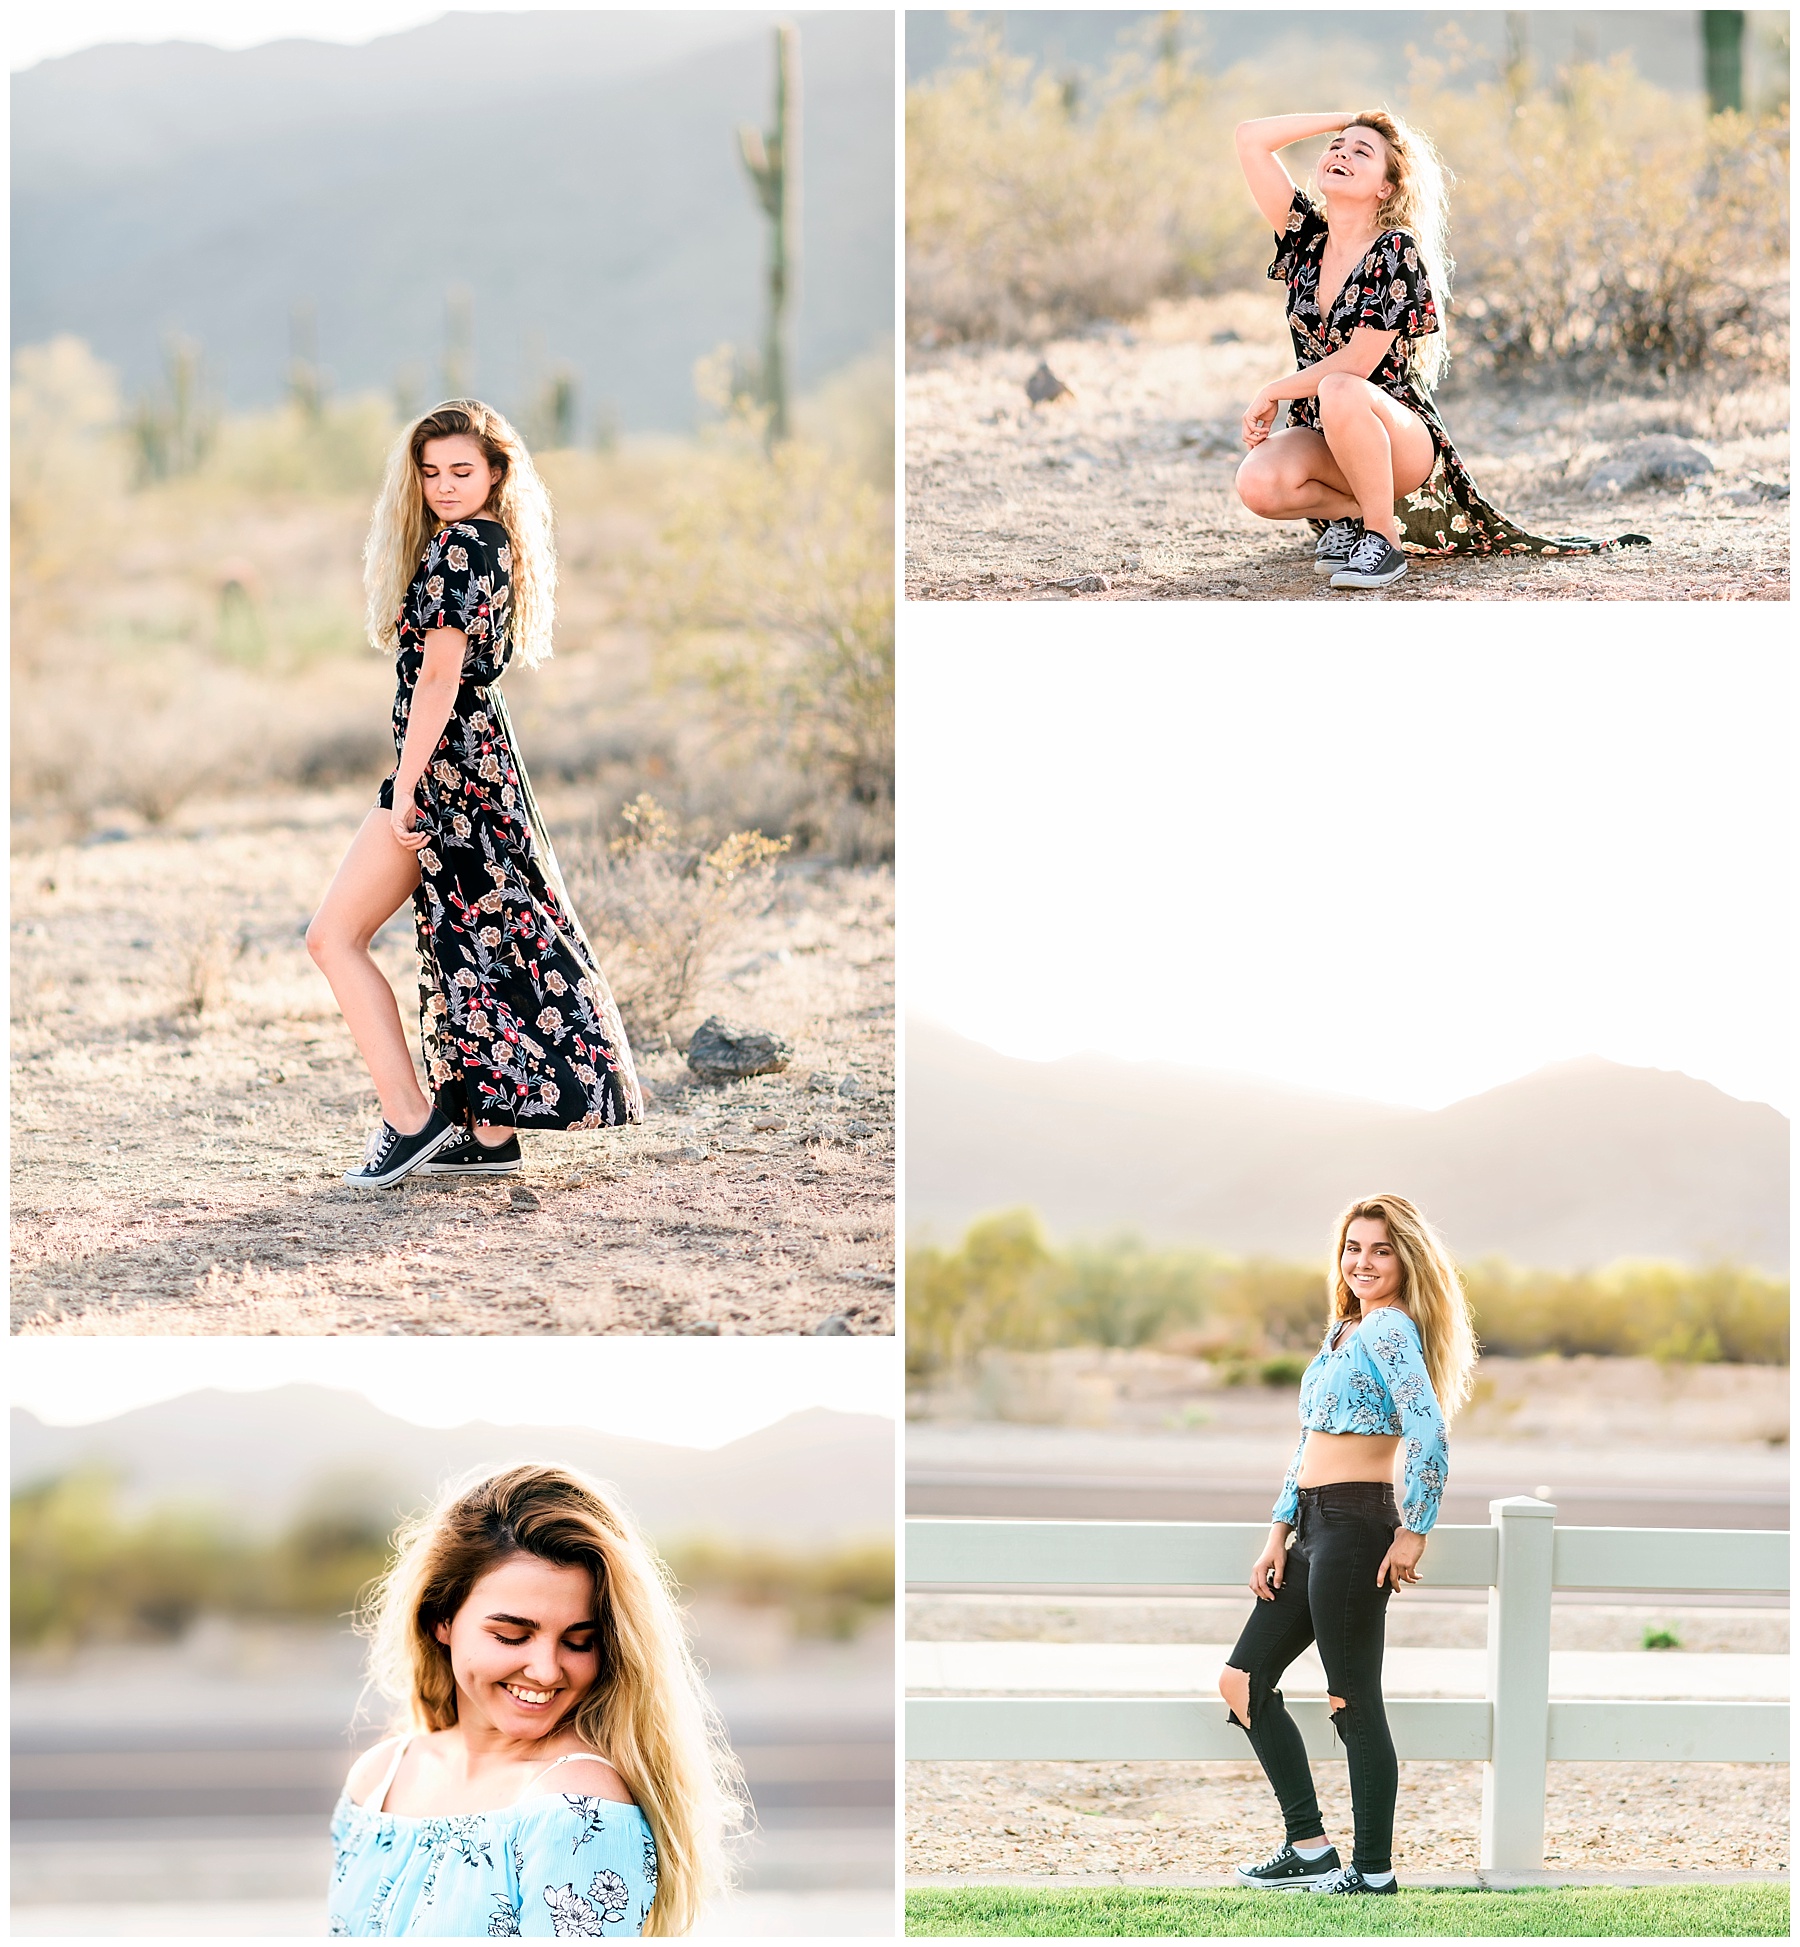 Kaitlyn's-Senior-Photos-White-Tank-Mountains-Arizona-Ashley-Flug-Photography11-1.jpg